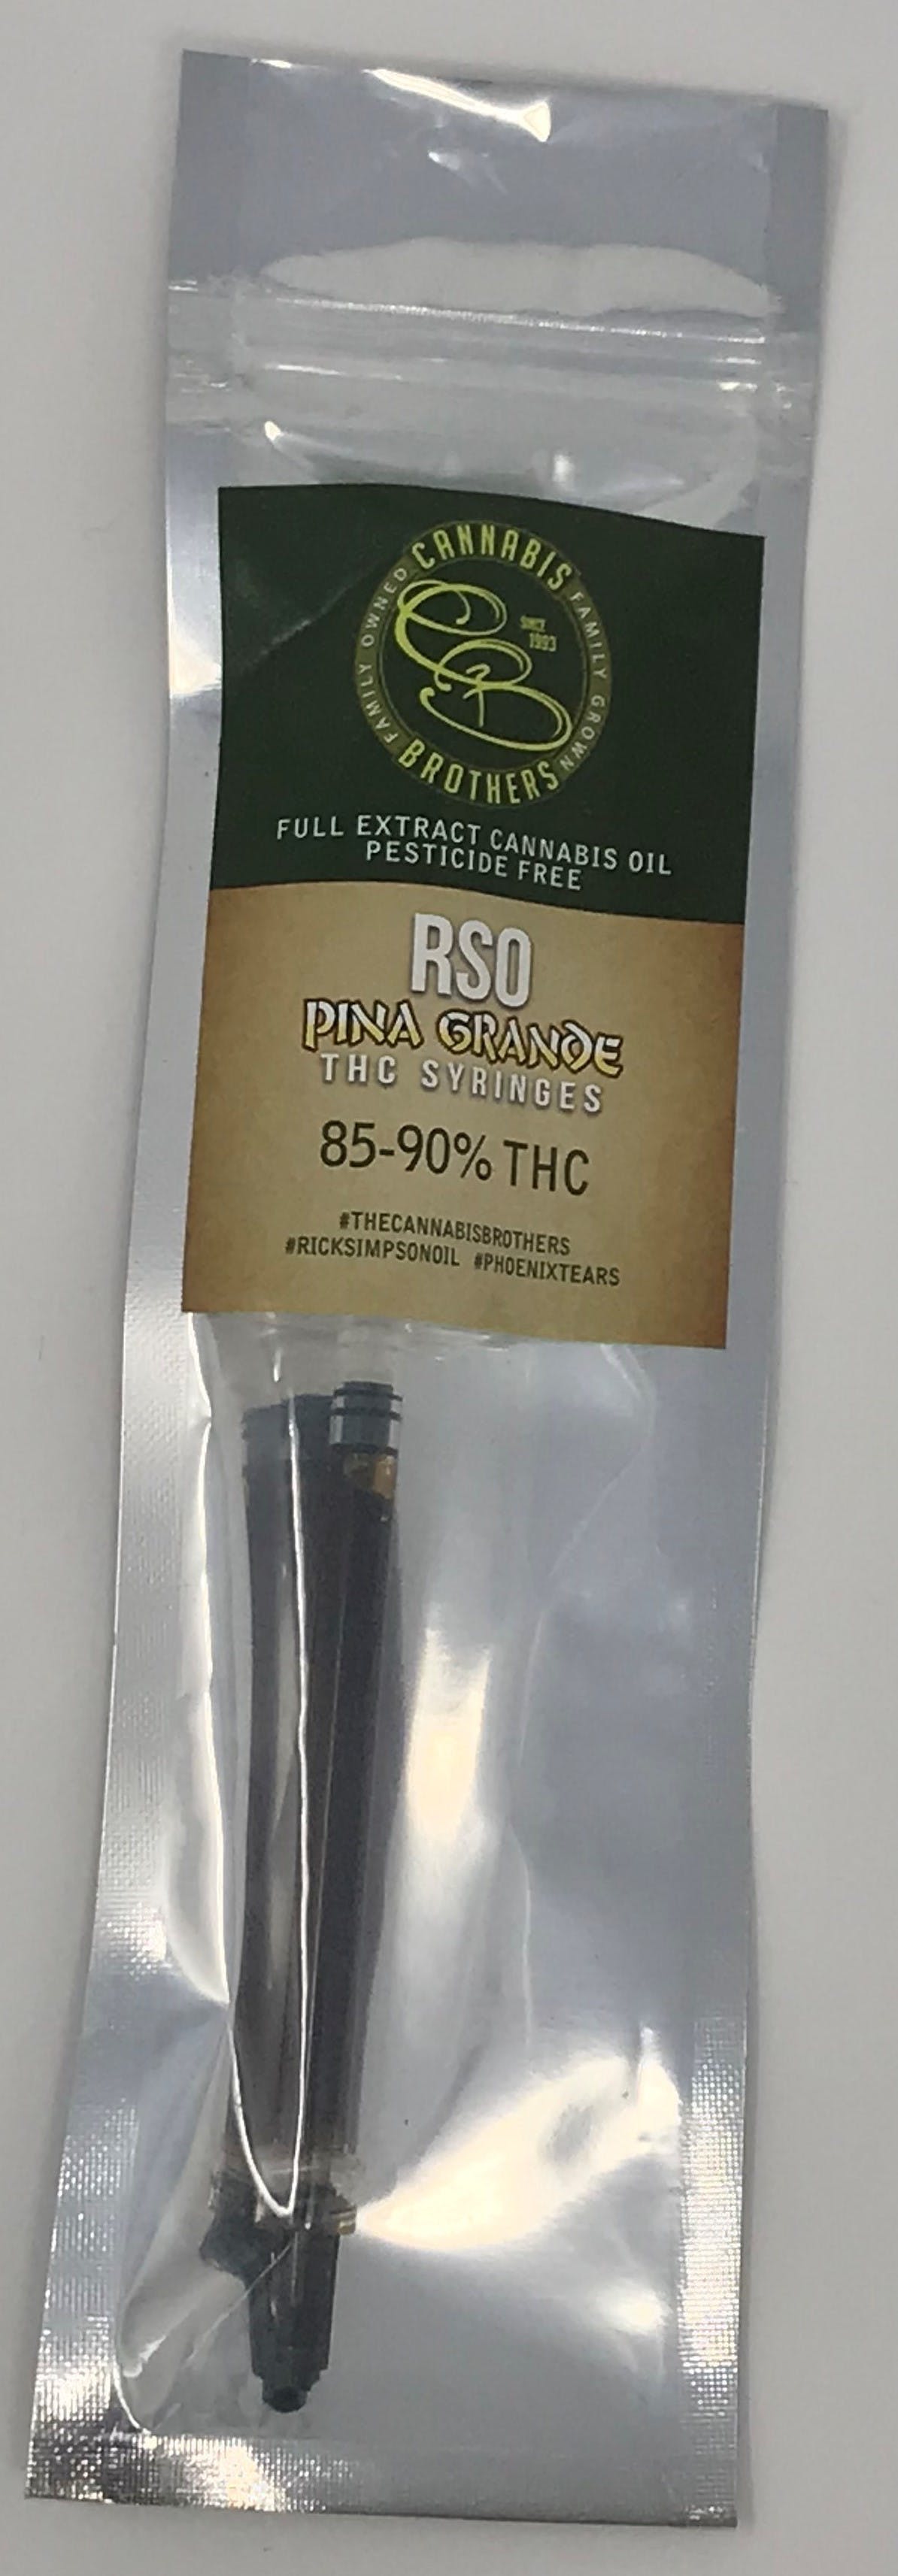 wax-cannabis-brothers-thc-syringe-pina-grande-1g